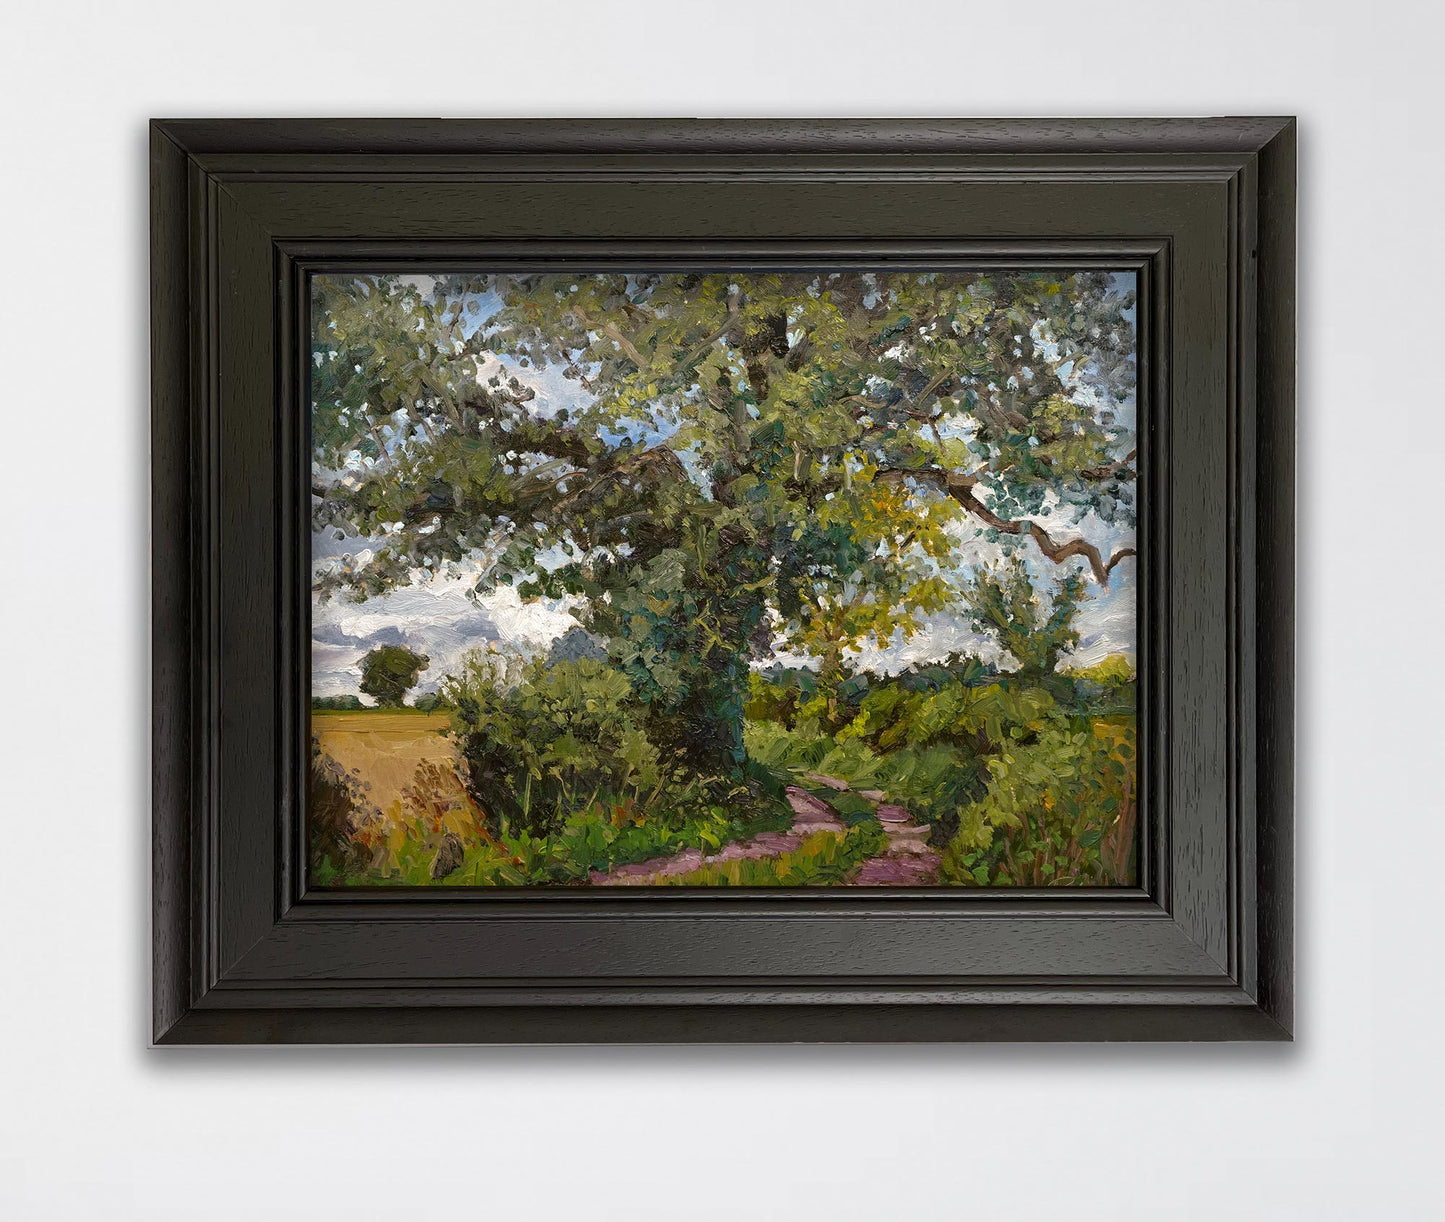 Corner Oak, Pockley shown in a complmentary black frame